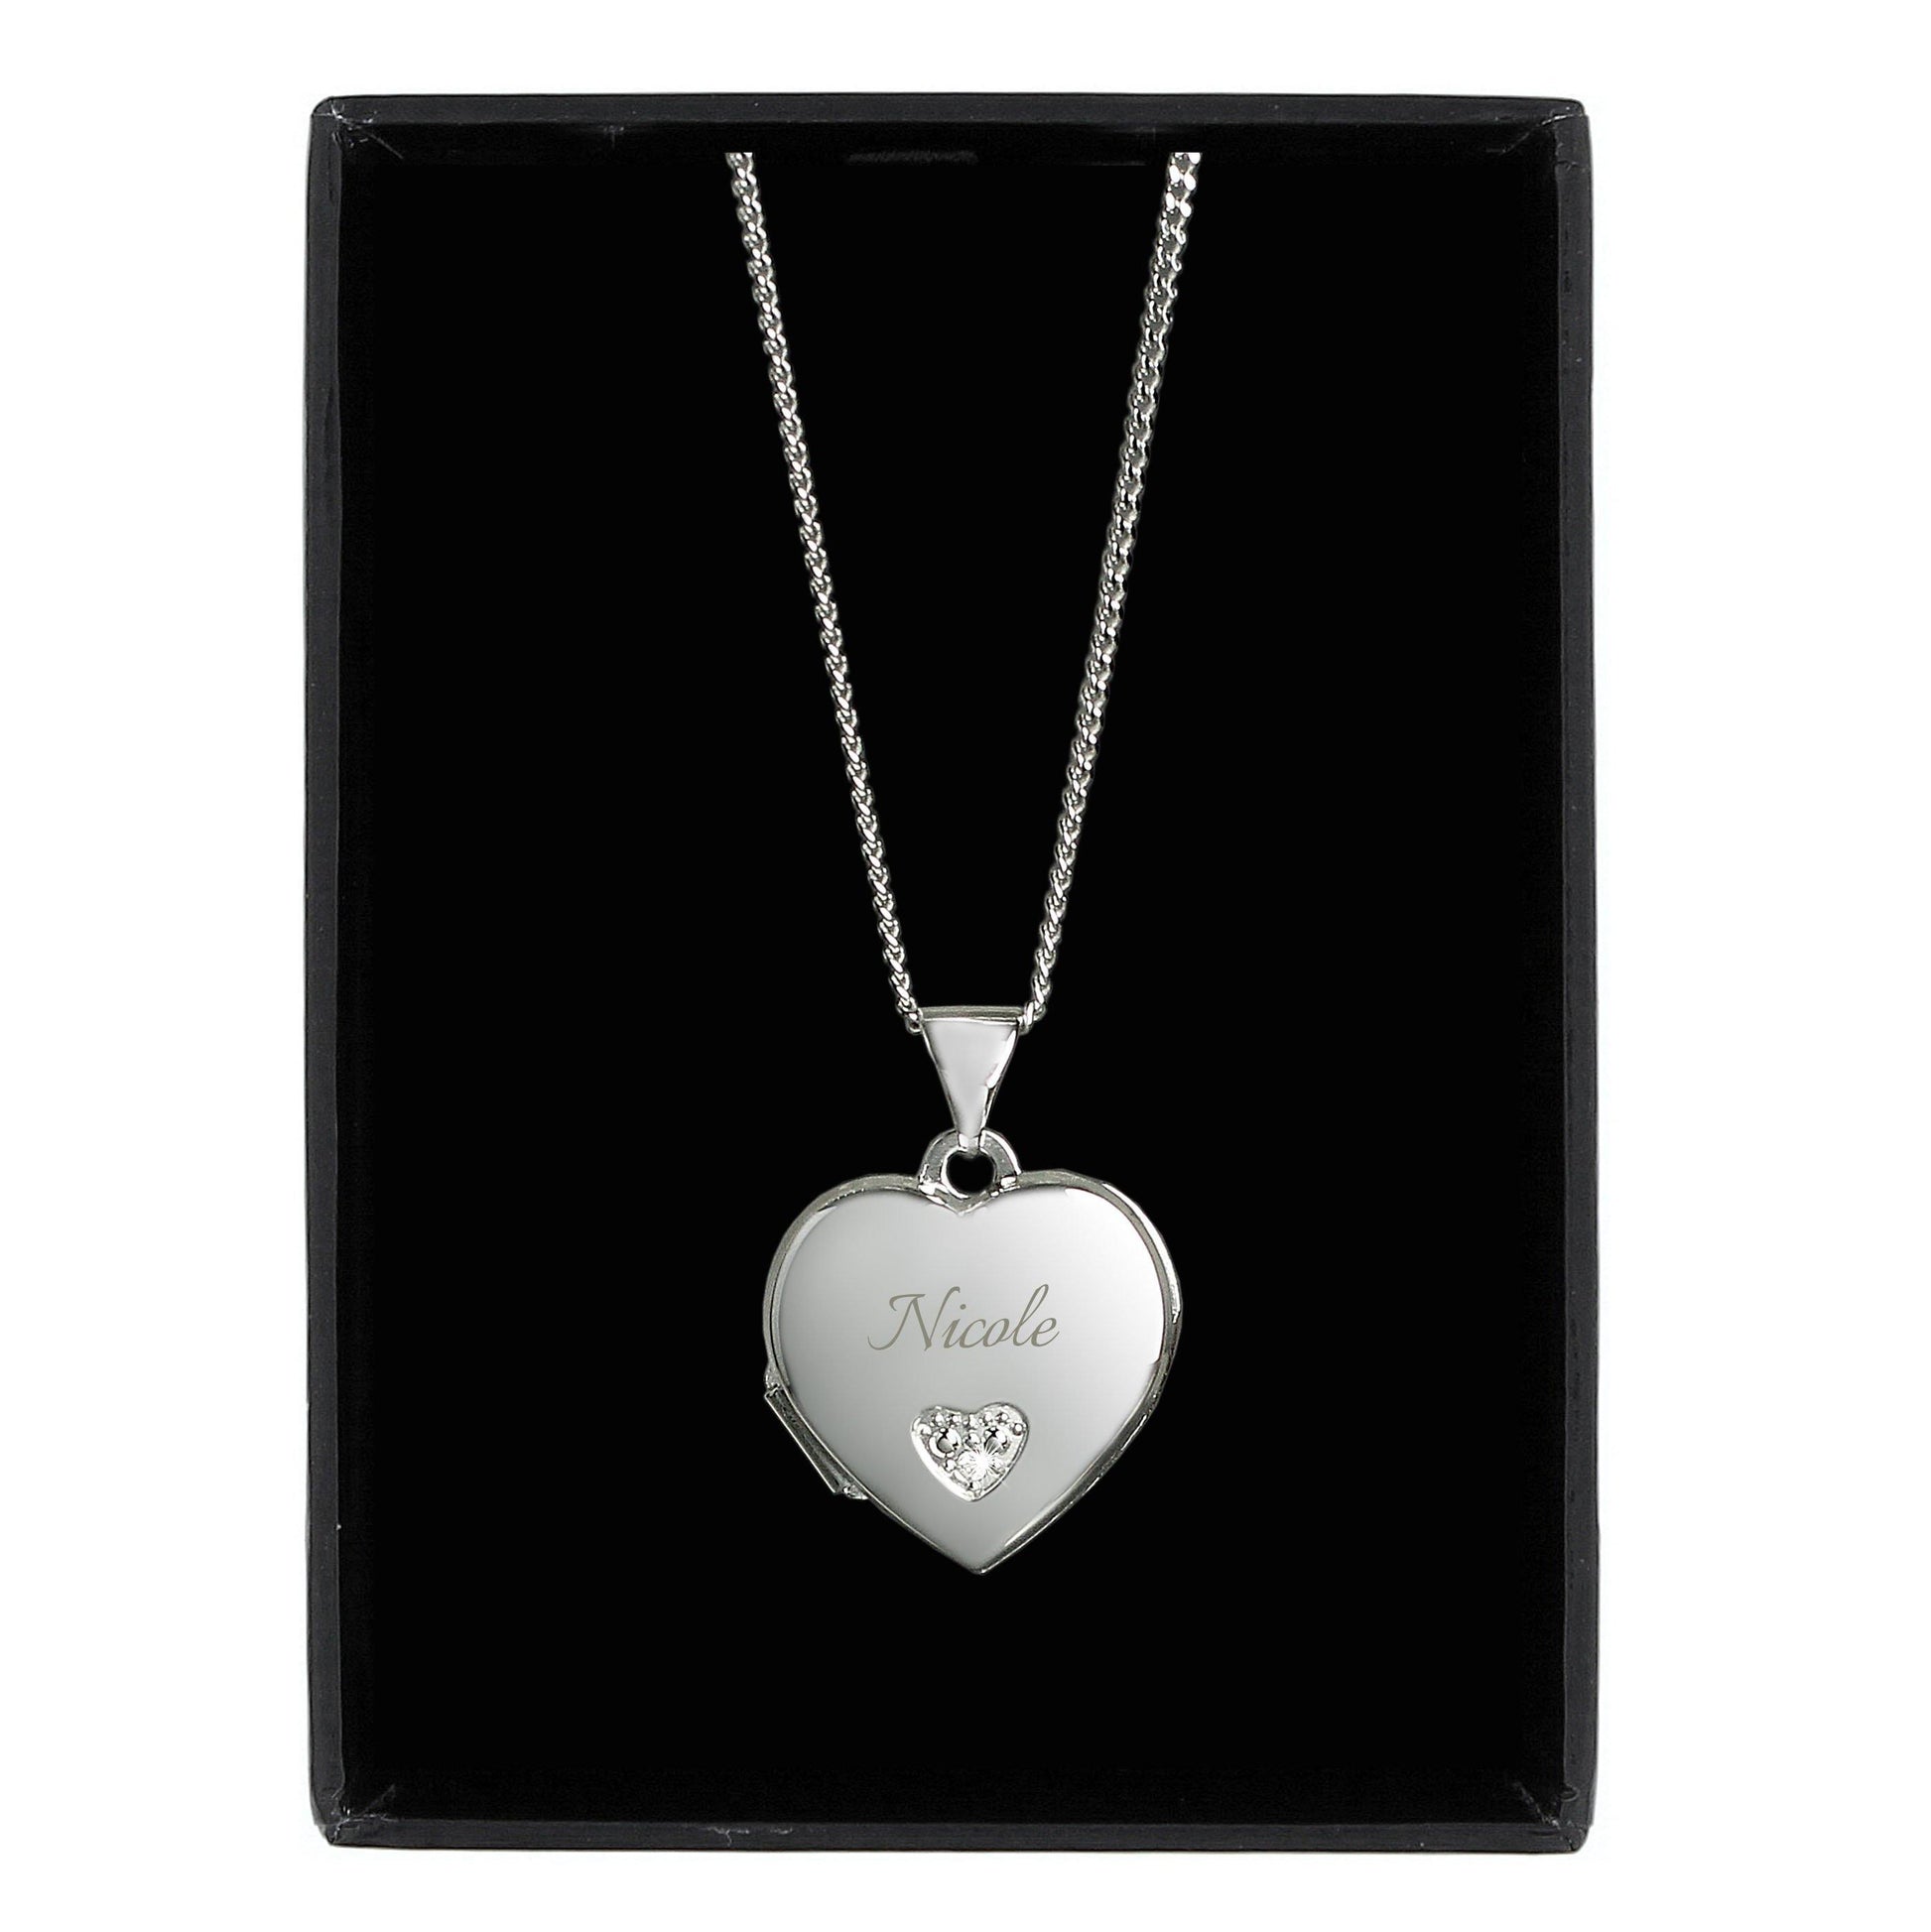 Personalised Children's Sterling Silver & Cubic Zirconia Heart Locket Necklace - Kporium Home & Garden